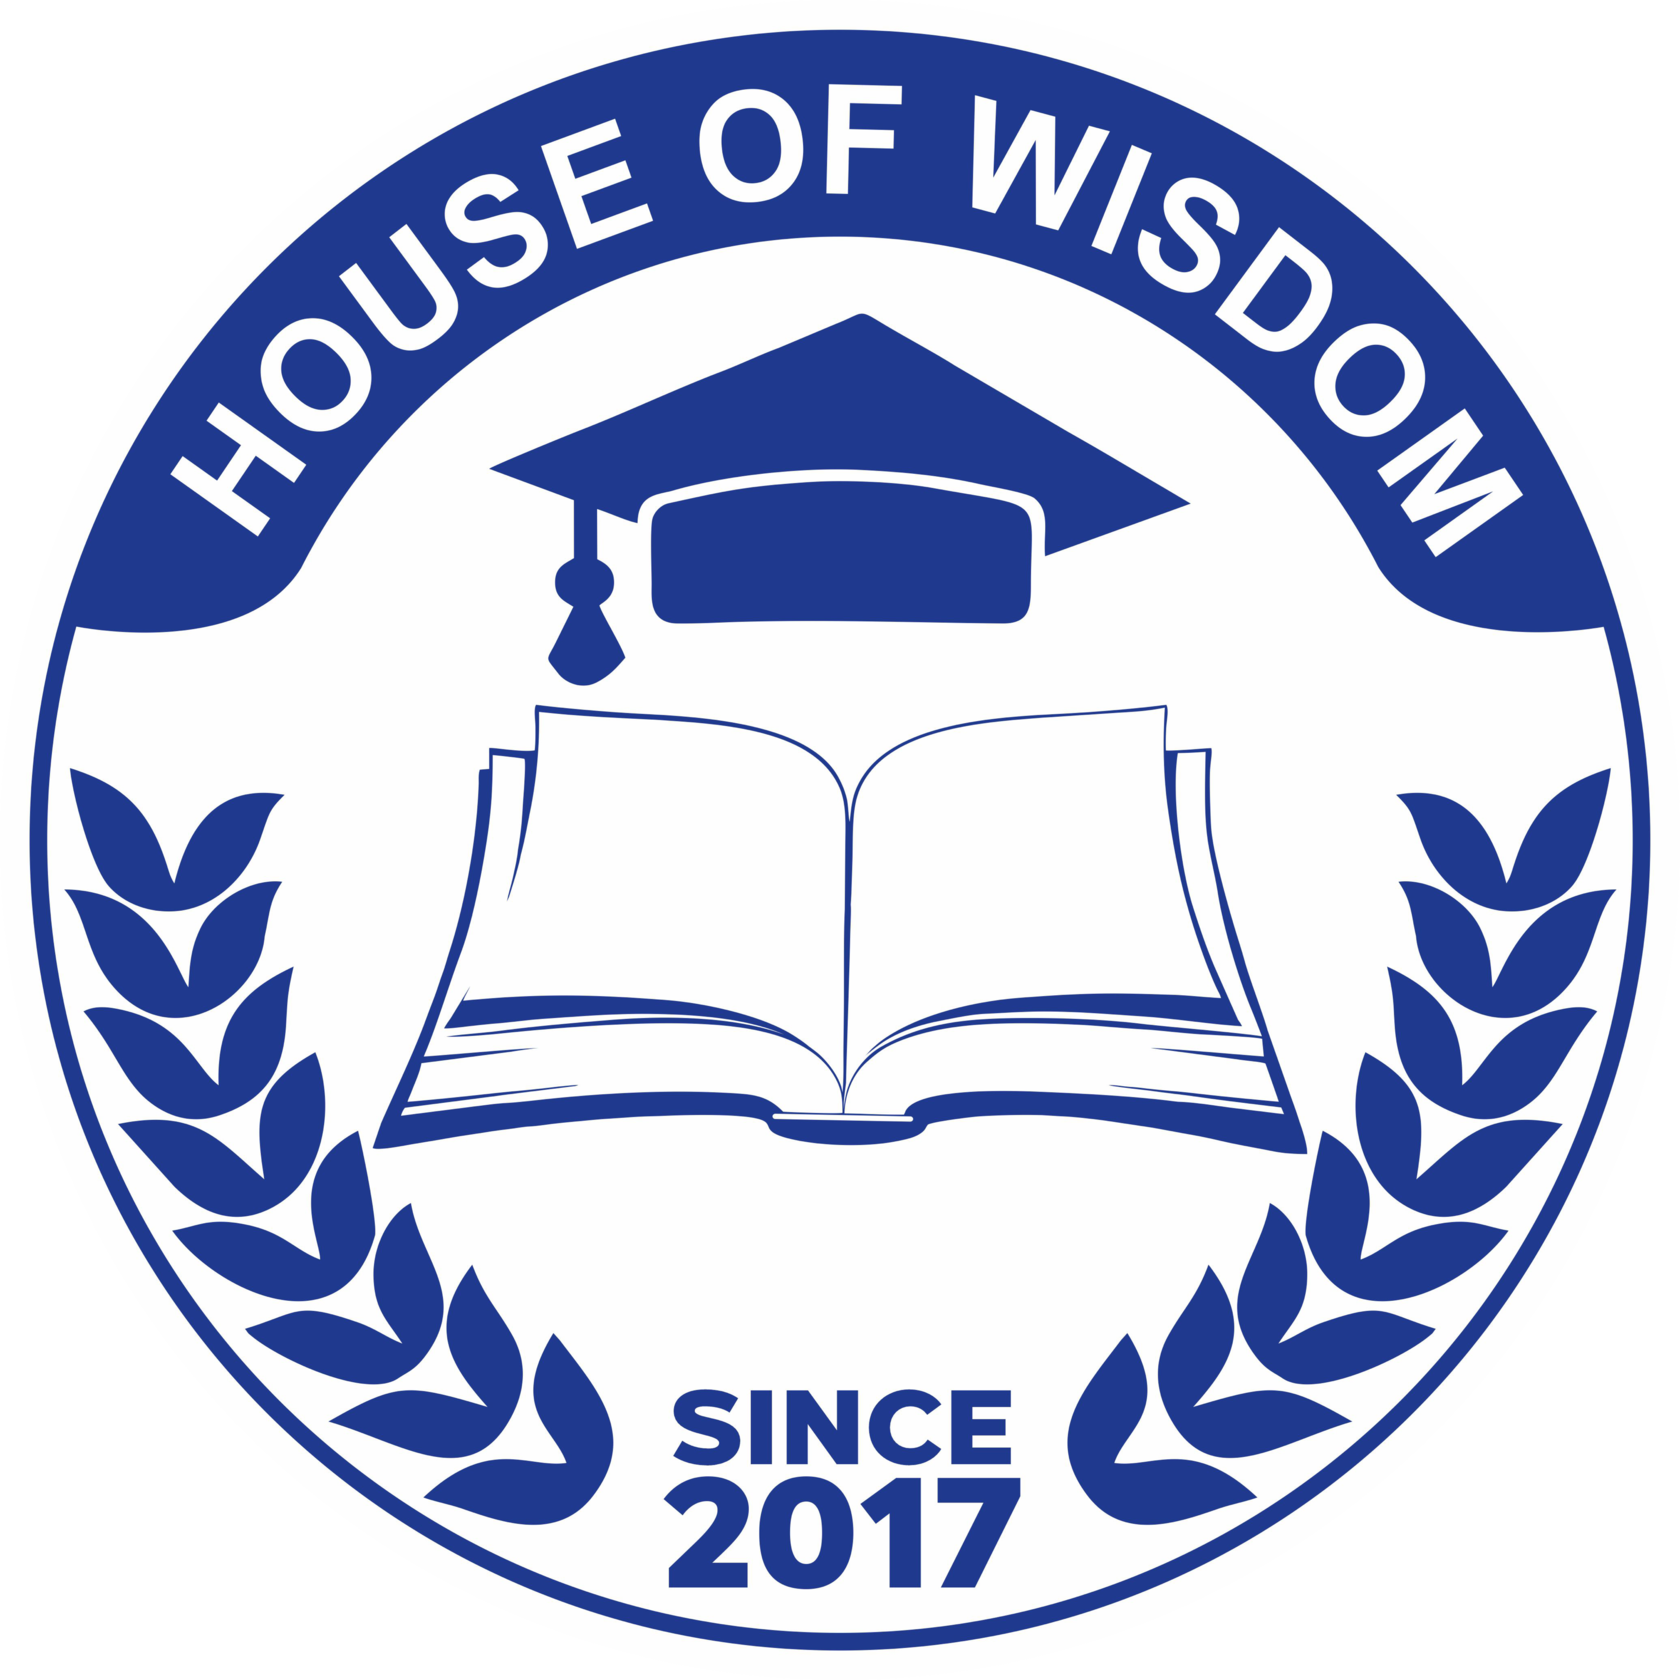 House of Wisdom